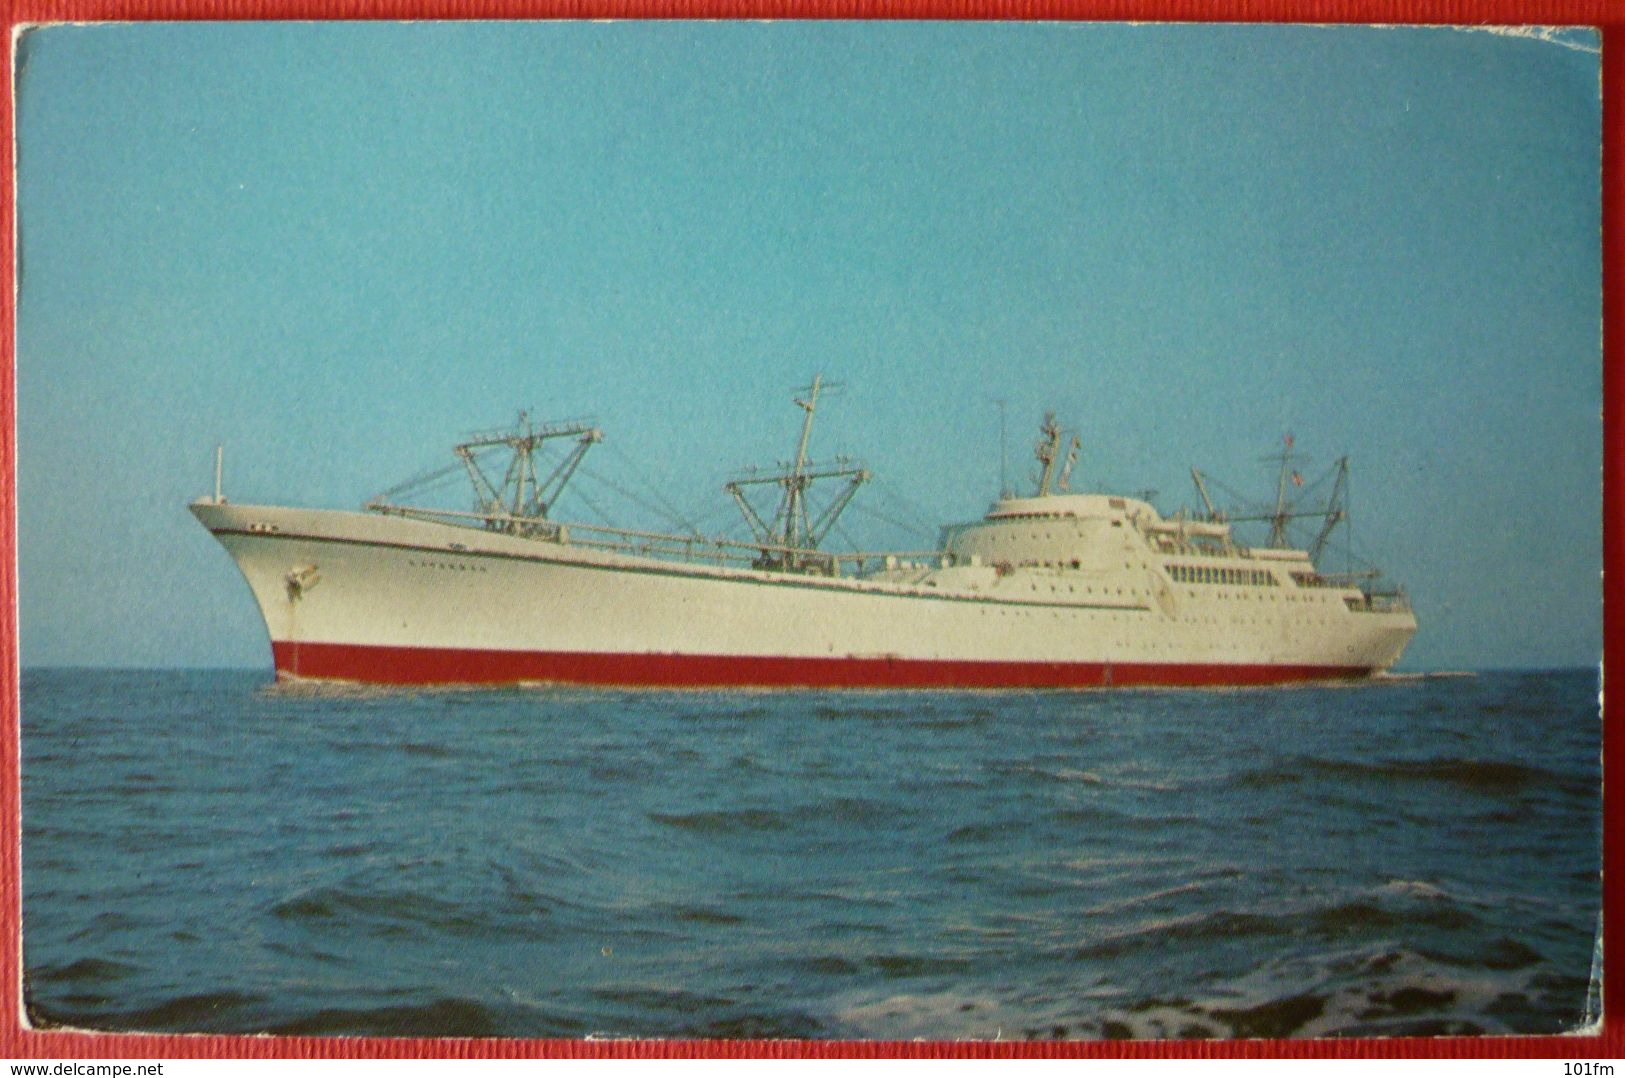 NUCLEAR SHIP SAVANNAH - Dampfer